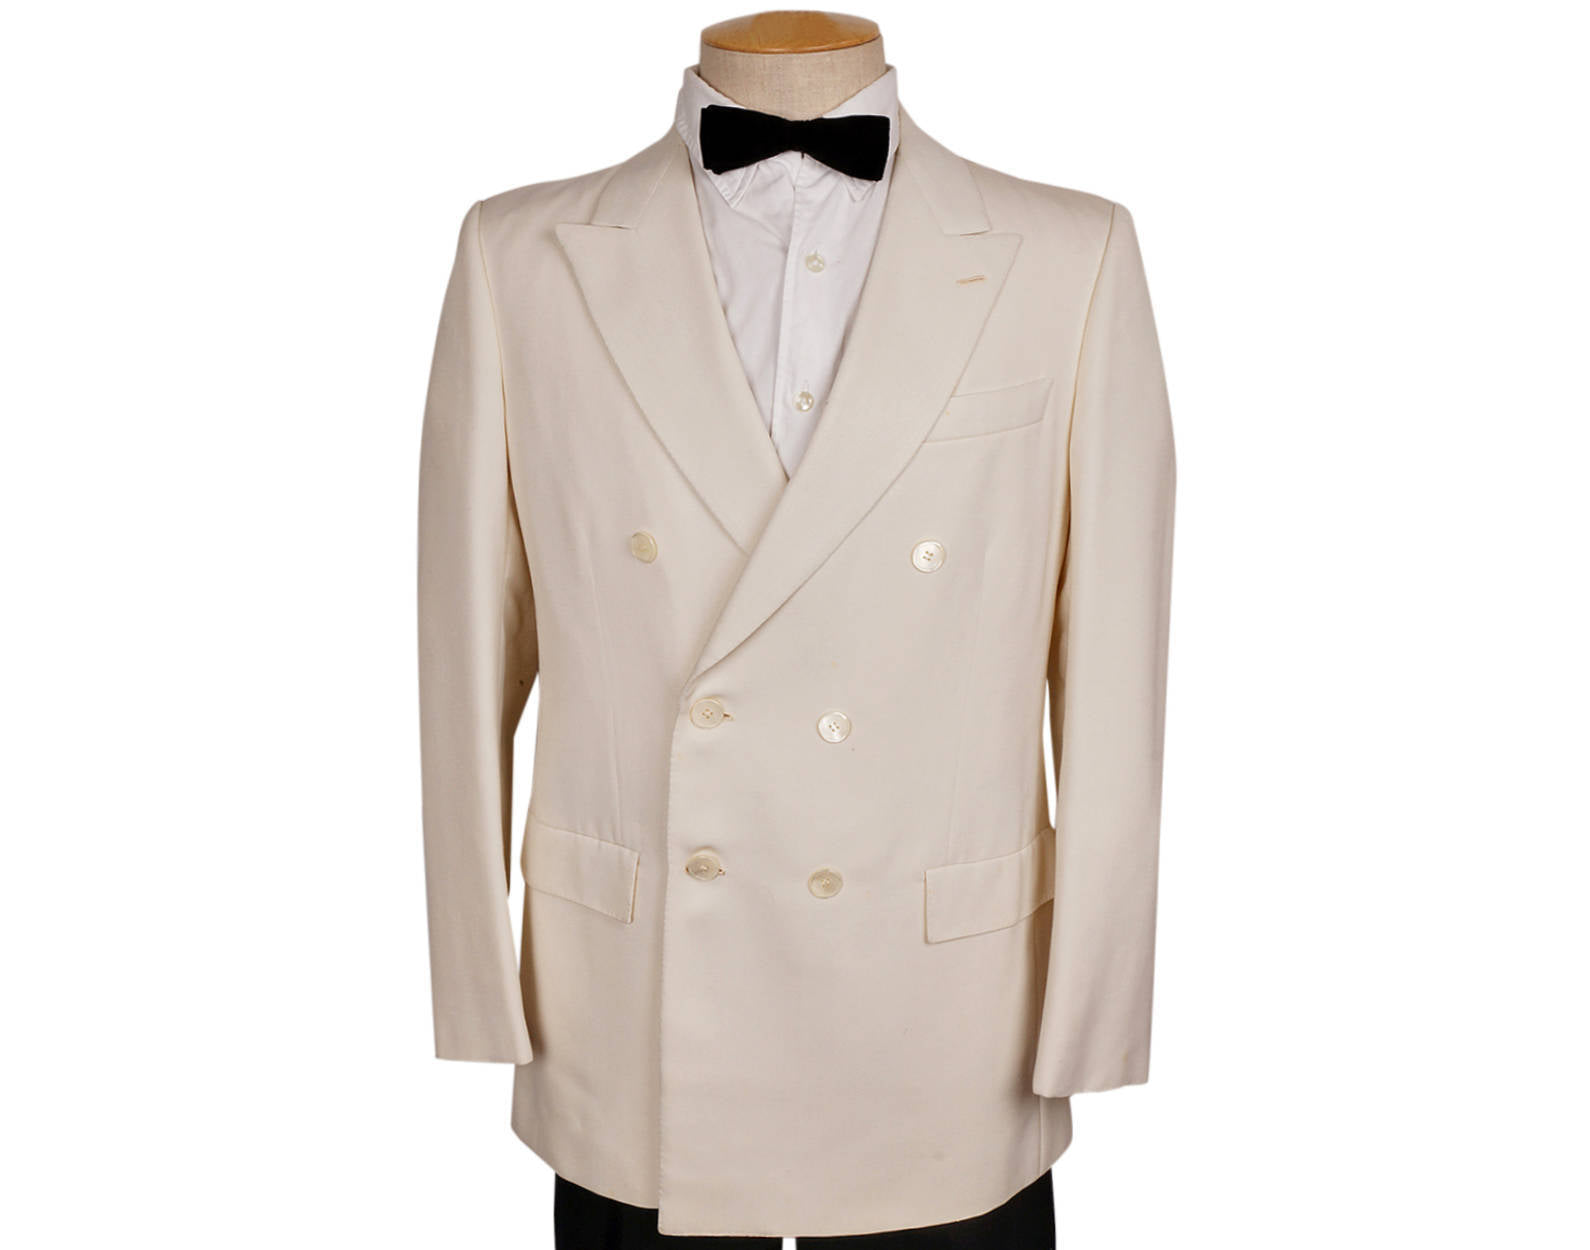 Vintage 1970s White Dinner Jacket - Gillio Paris -Size M